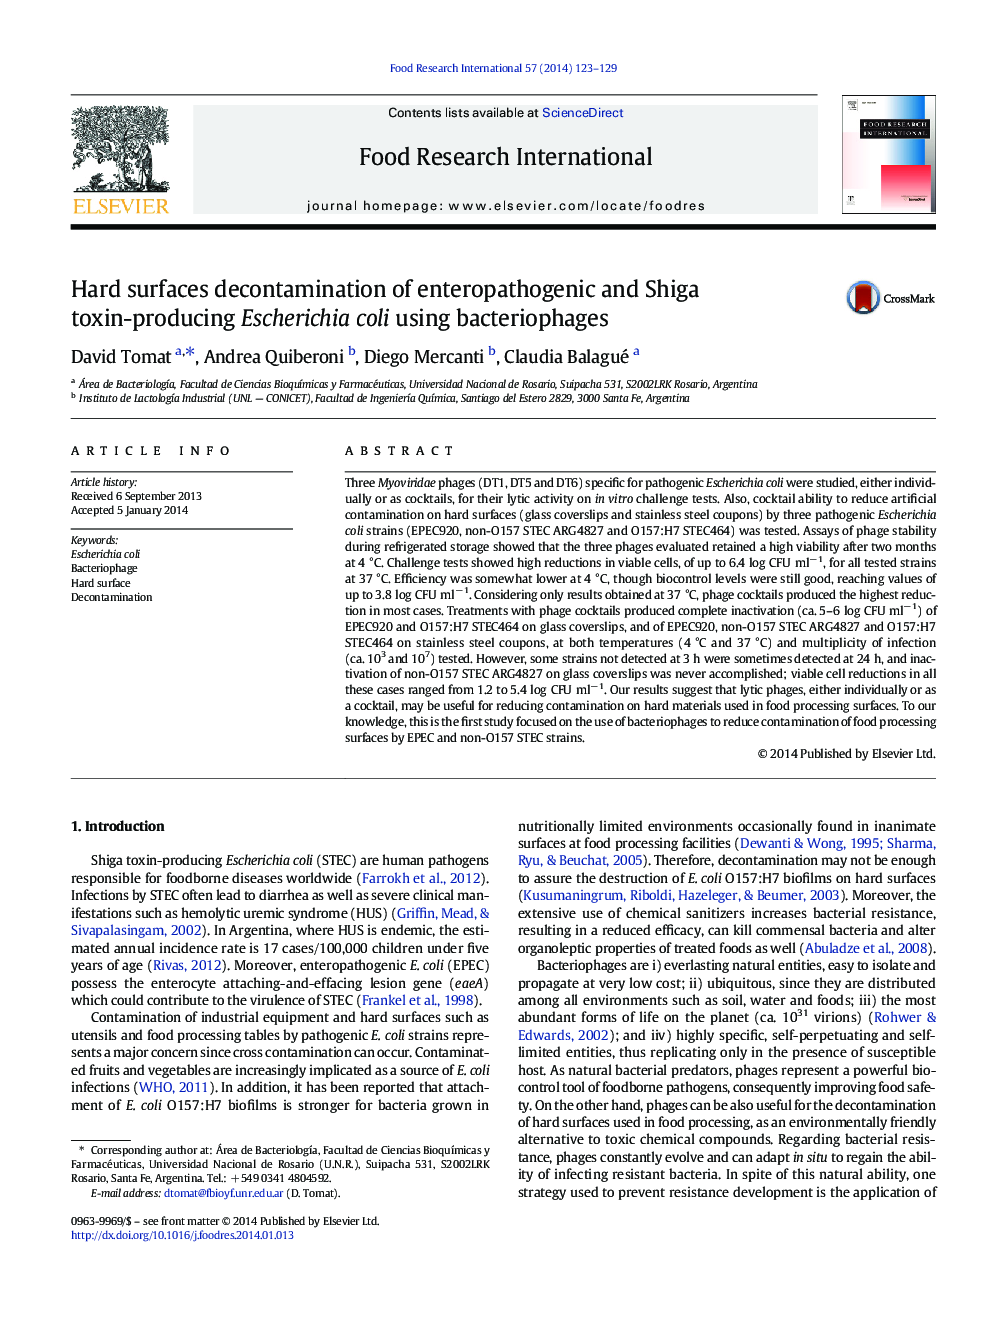 Hard surfaces decontamination of enteropathogenic and Shiga toxin-producing Escherichia coli using bacteriophages